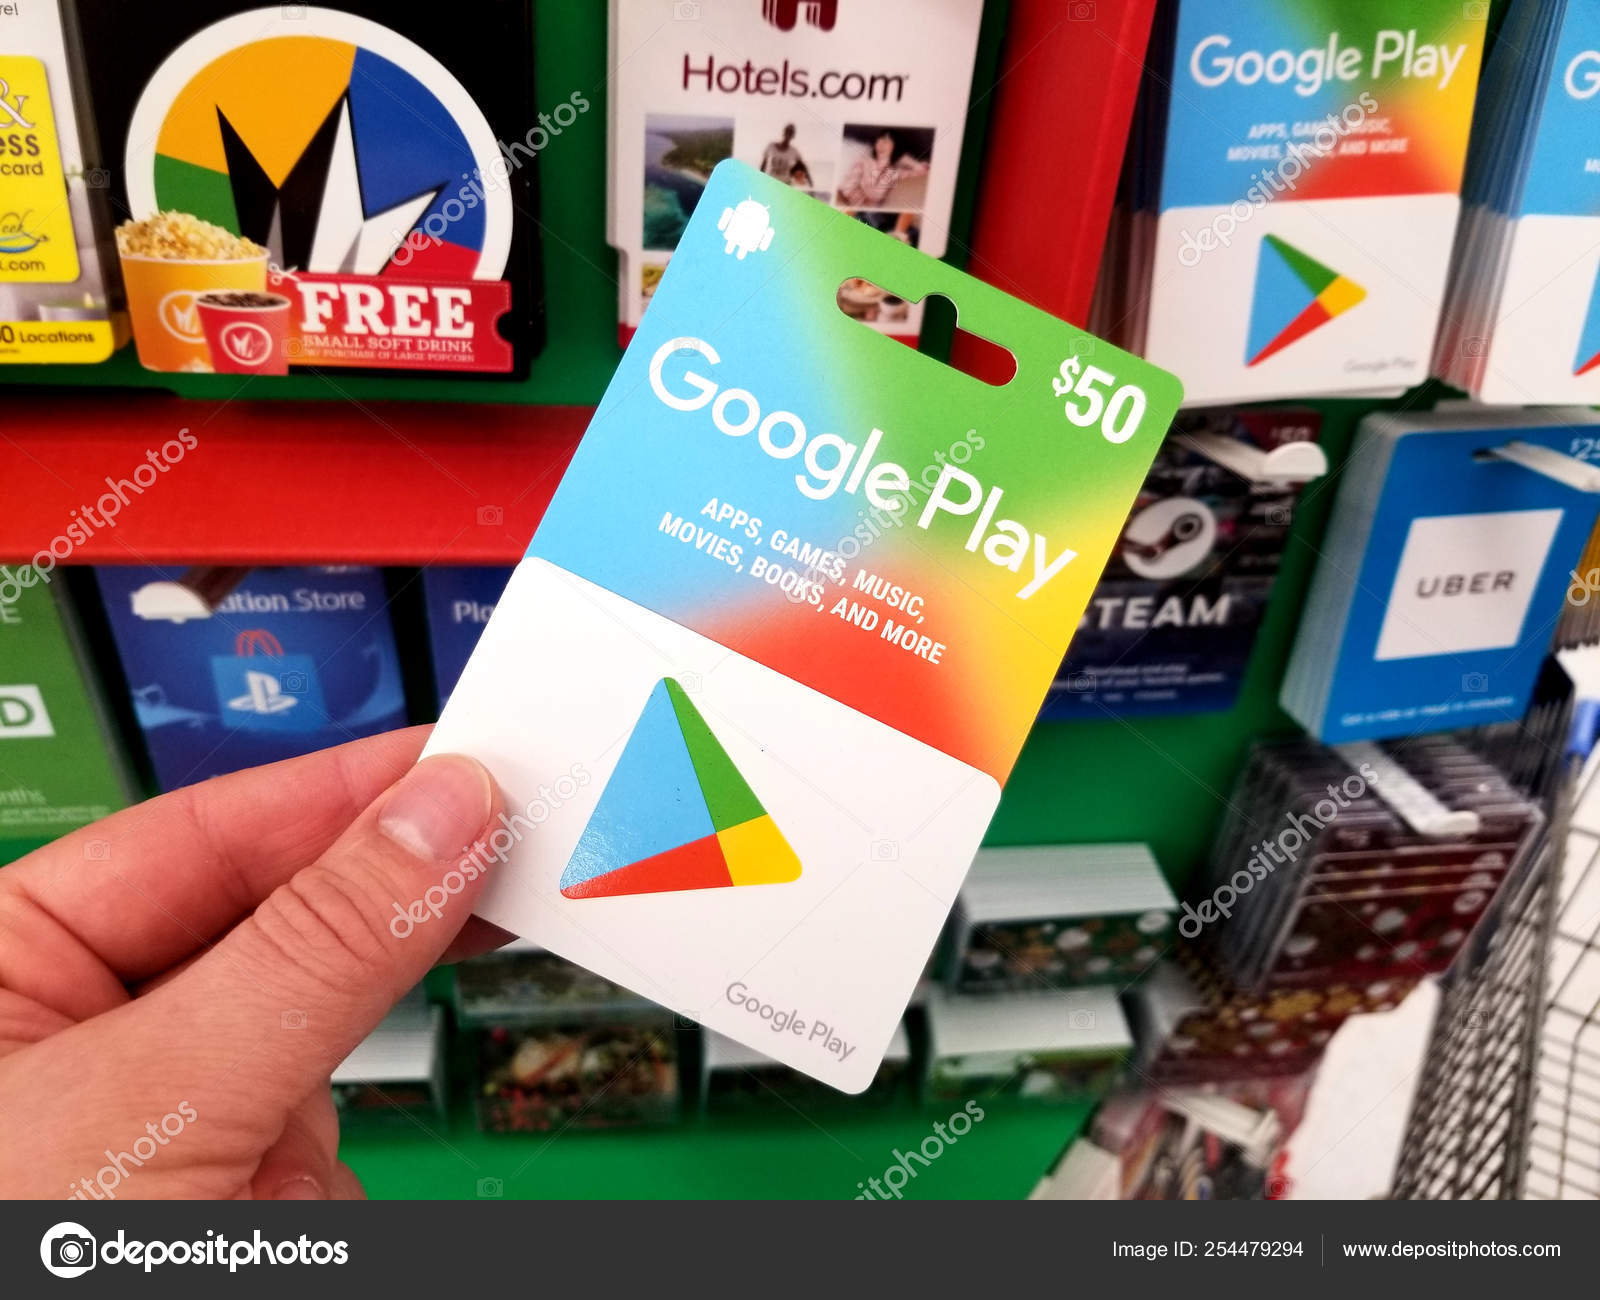 Google Play Card